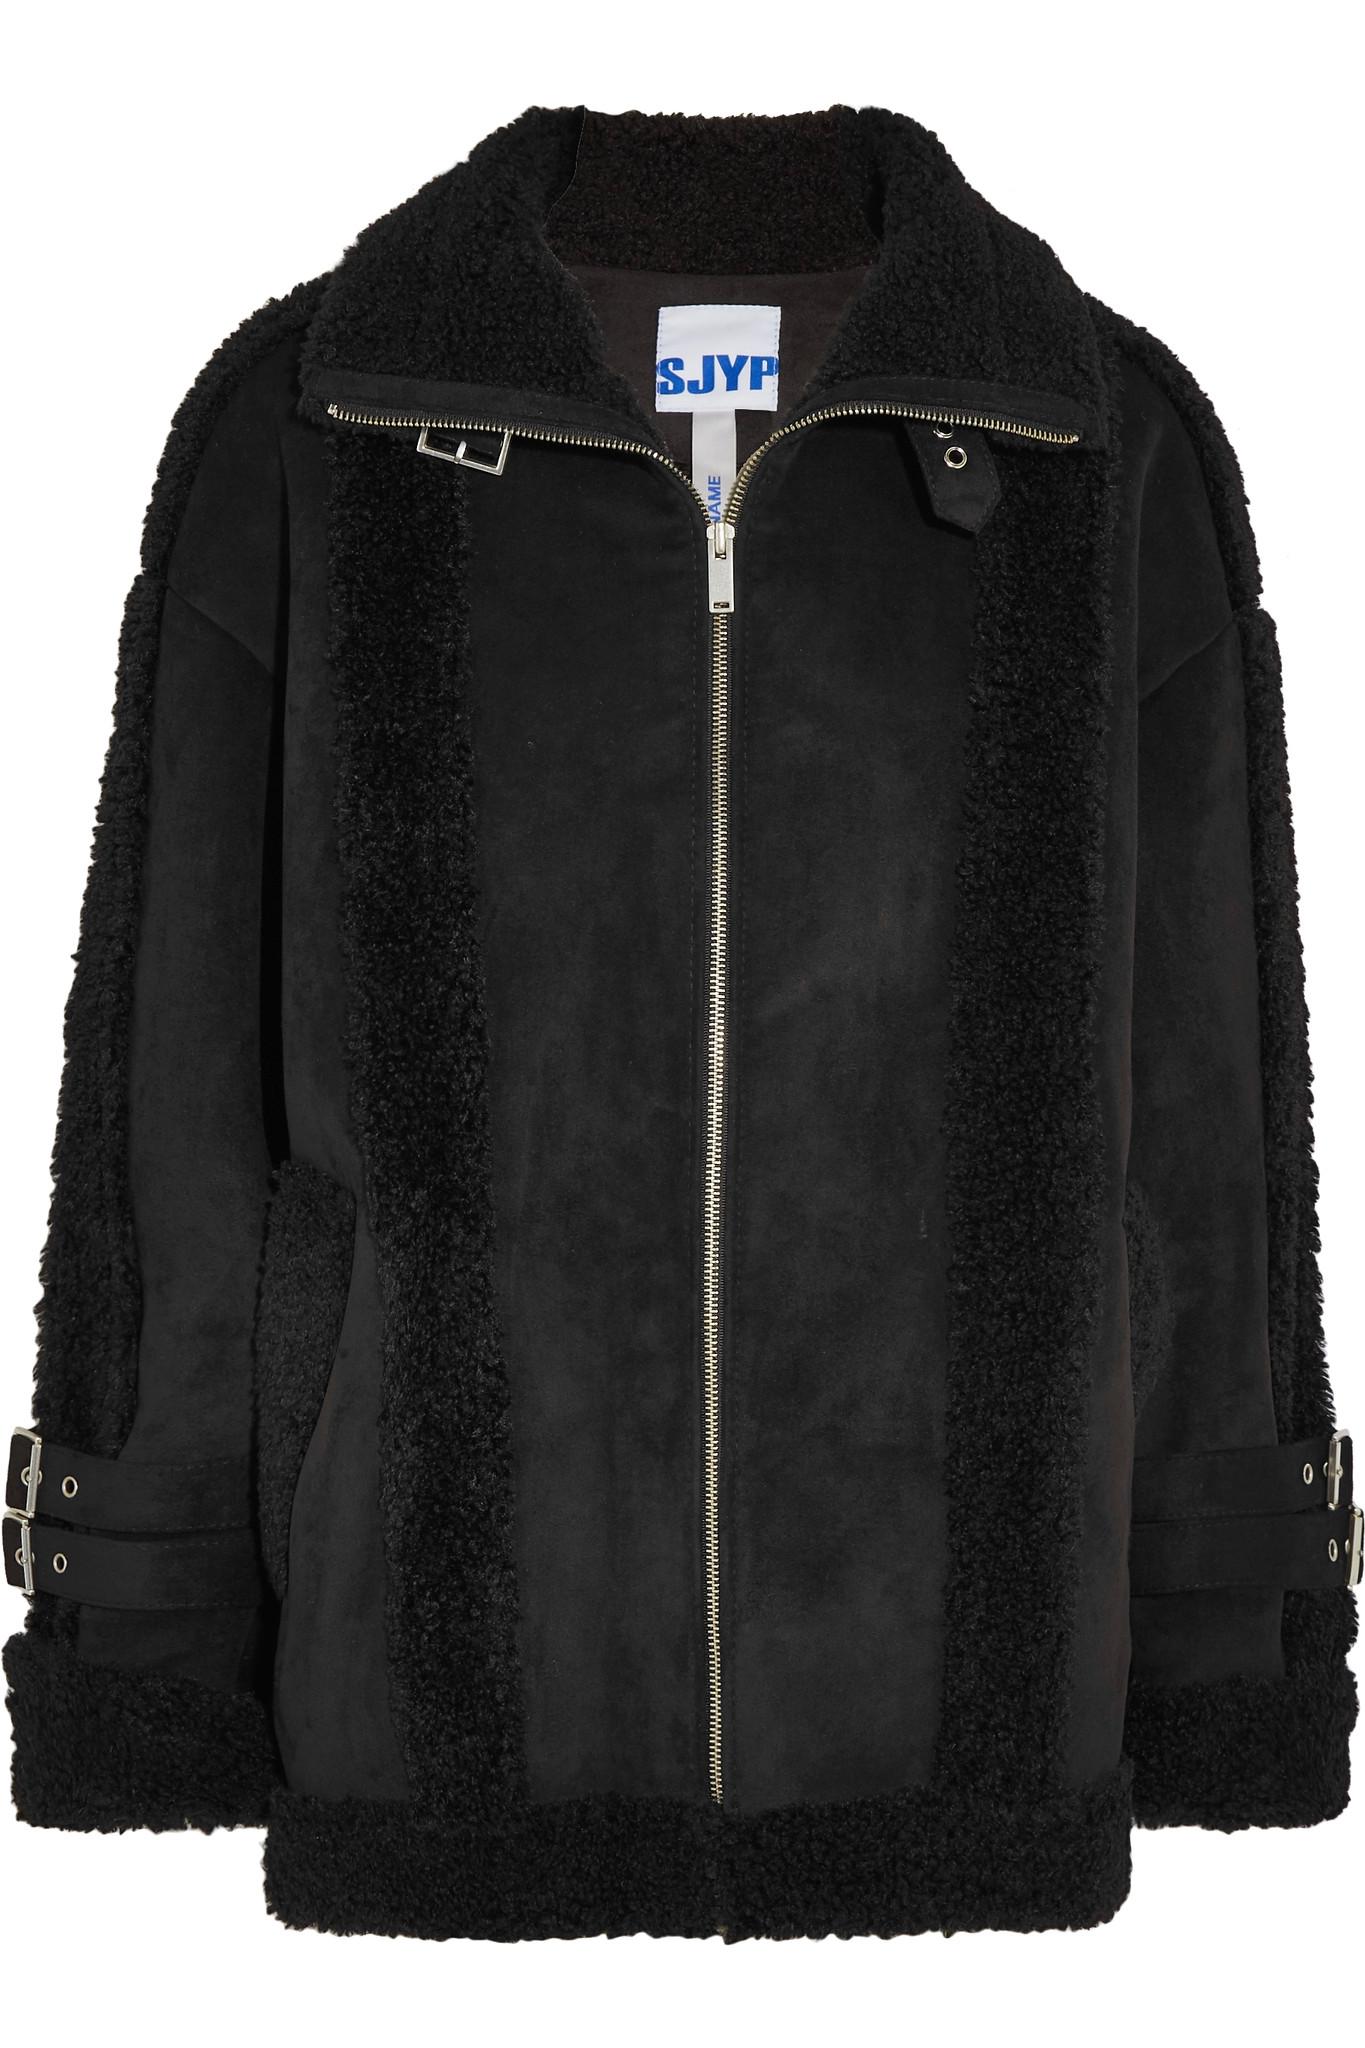 Lyst - SJYP Mustang Buckled Faux Shearling Jacket in Black